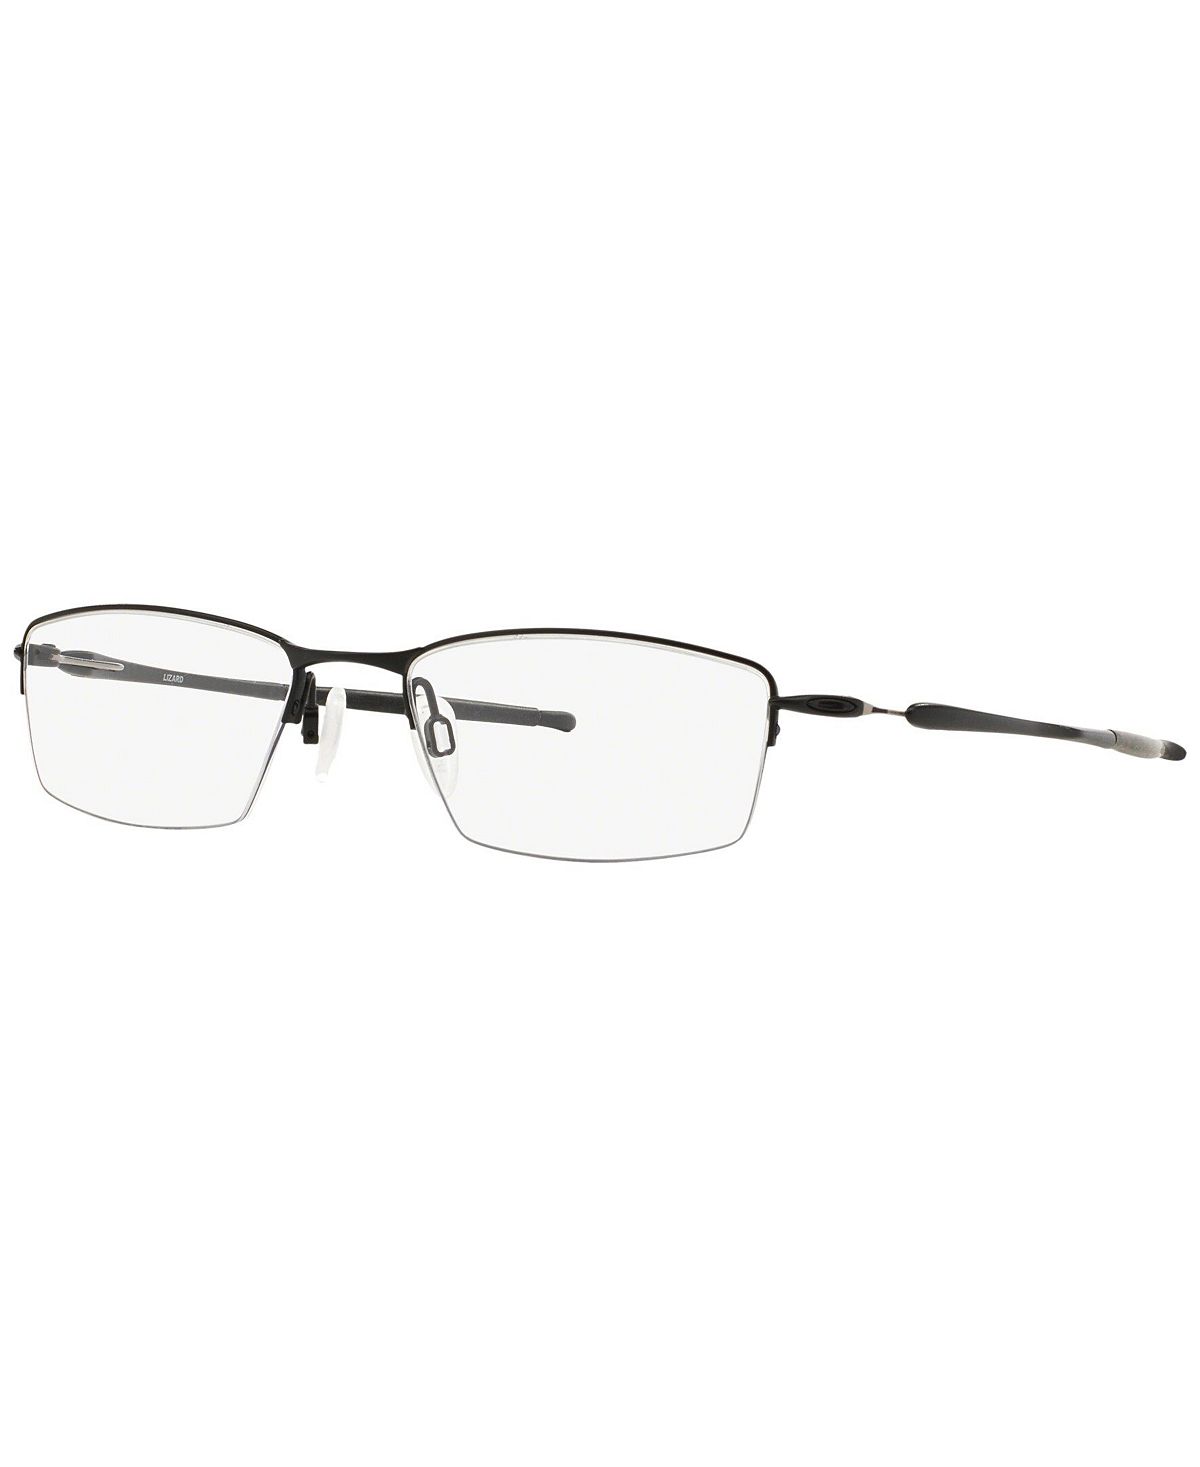 OX5113 Мужские прямоугольные очки Lizard Oakley пульт к sat integral th 7300 sat